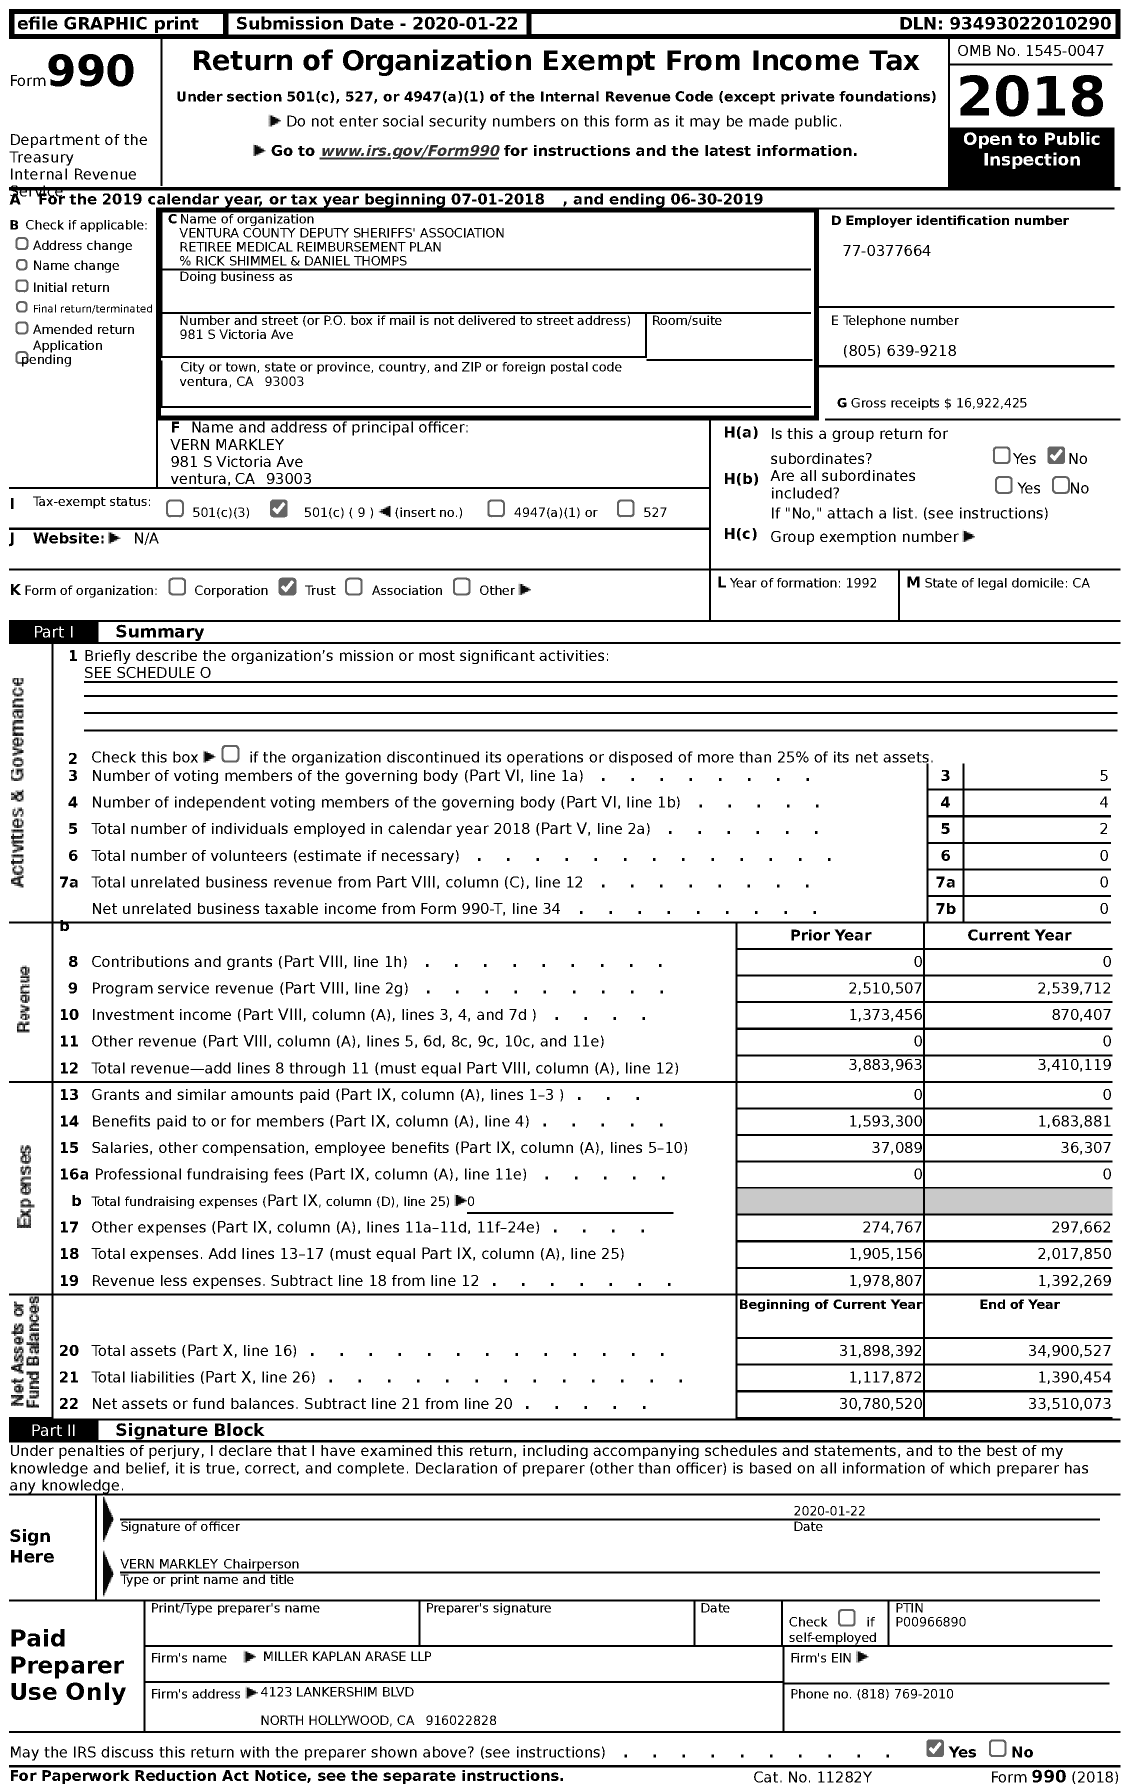 Image of first page of 2018 Form 990 for Ventura County Deputy Sheriffs' Association Retiree Medical Reimbursement Plan